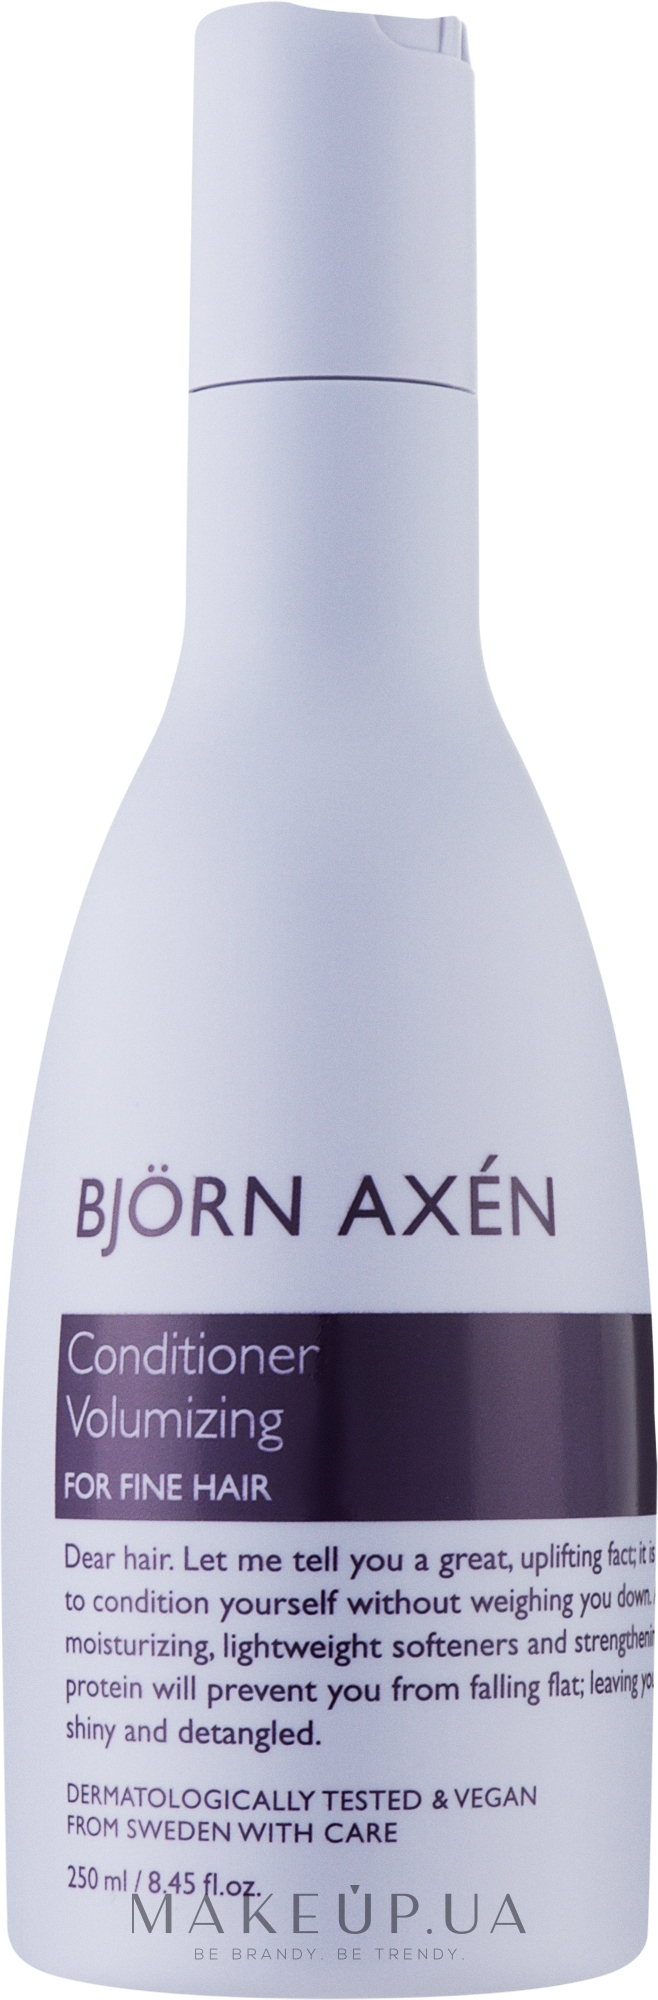 Кондиционер для объема волос - BjOrn AxEn Volumizing Conditioner — фото 250ml